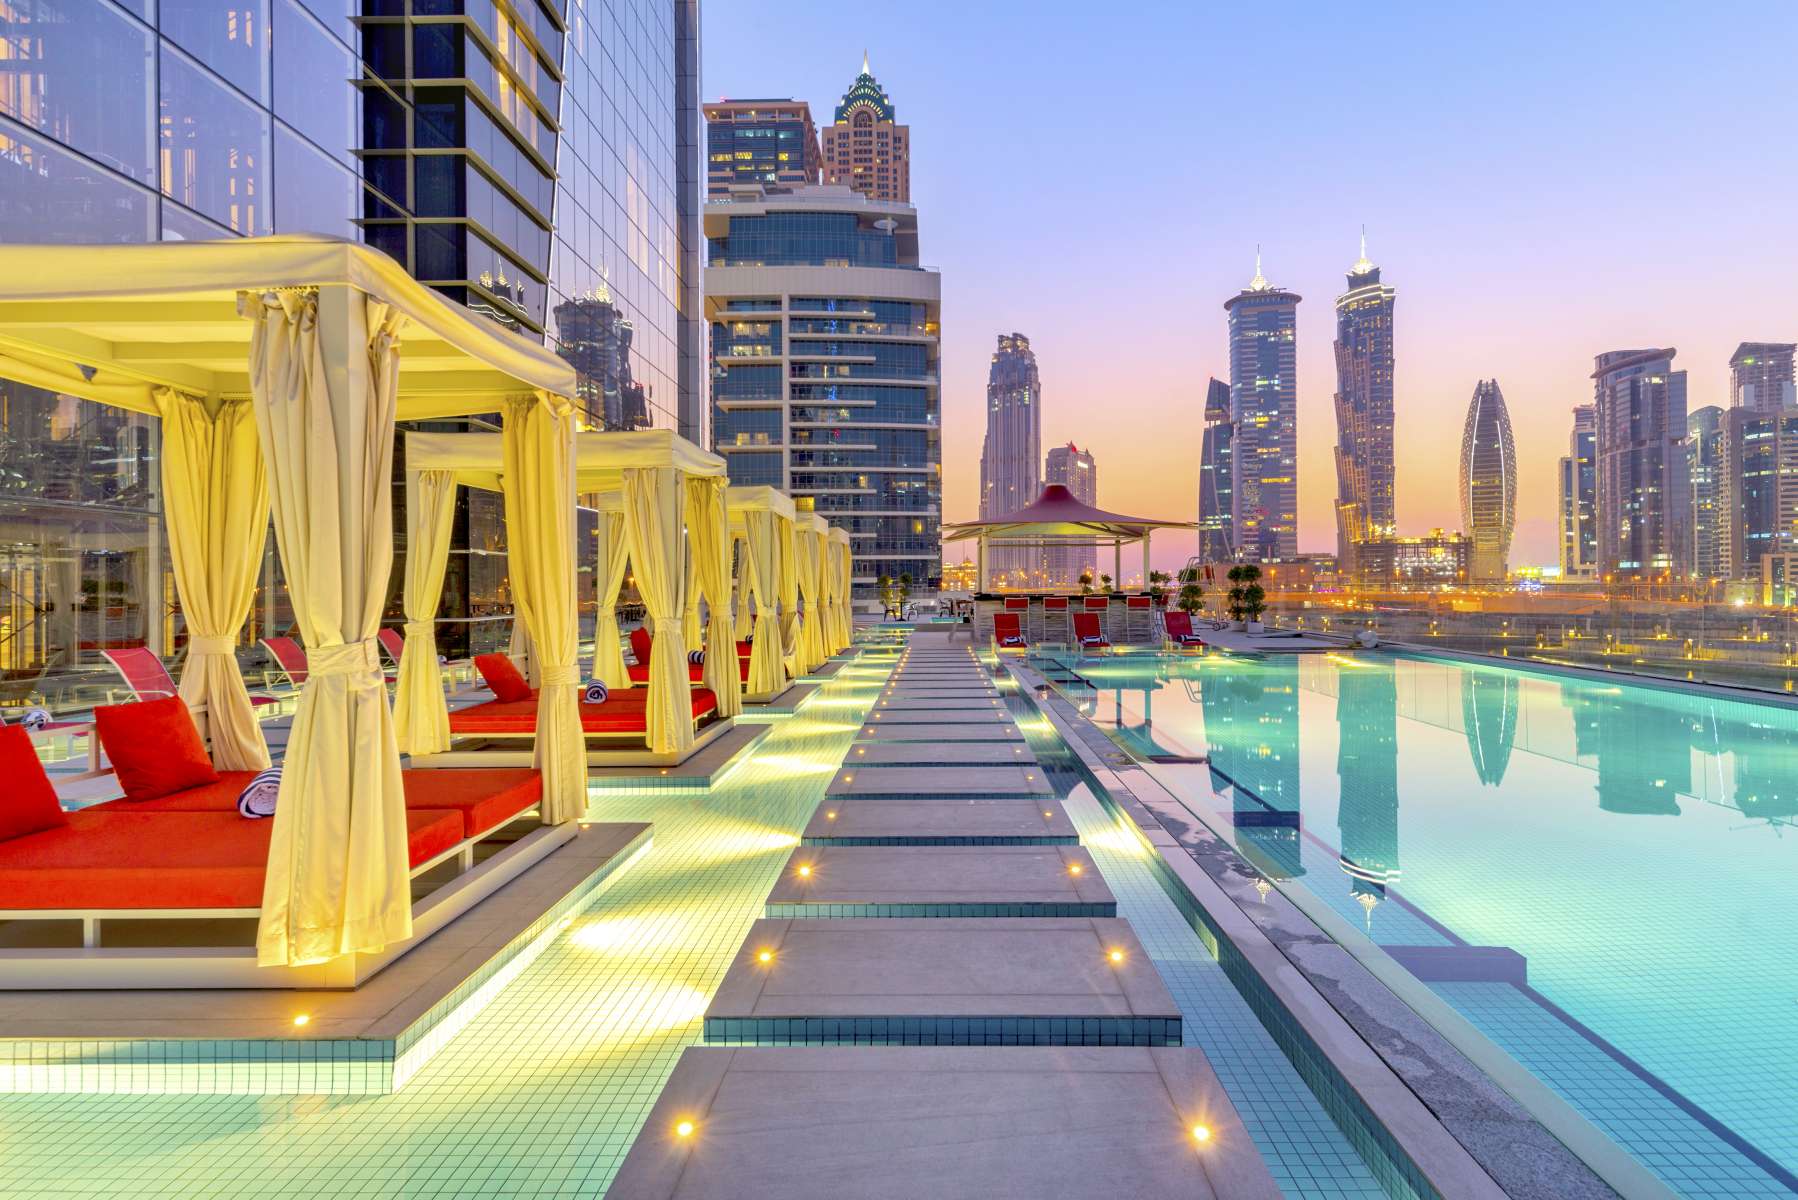 Hotels near me,Top hotels in Dubai,hotels in Dubai,Best ...